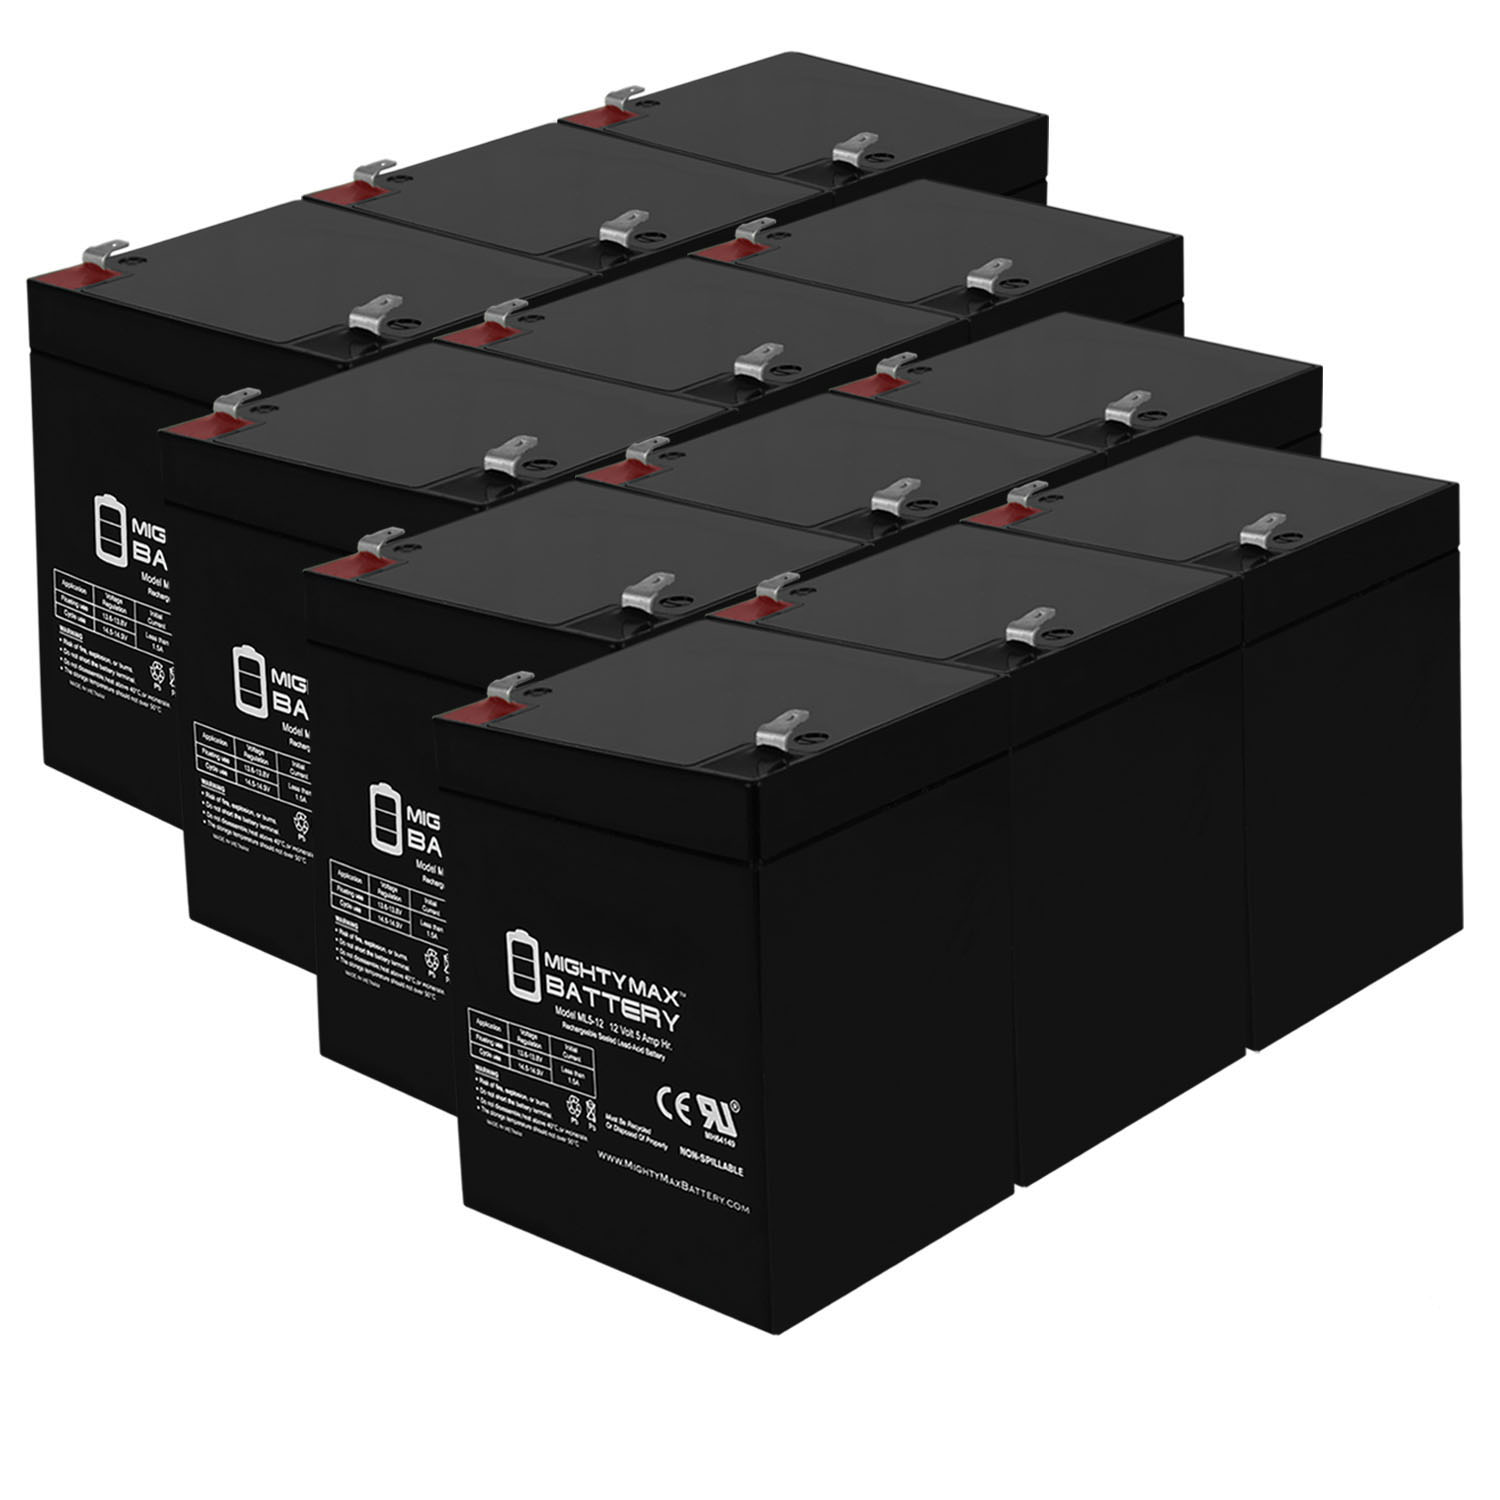 12V 5AH SLA Replacement Battery for DSC Power 832 - 12 Pack